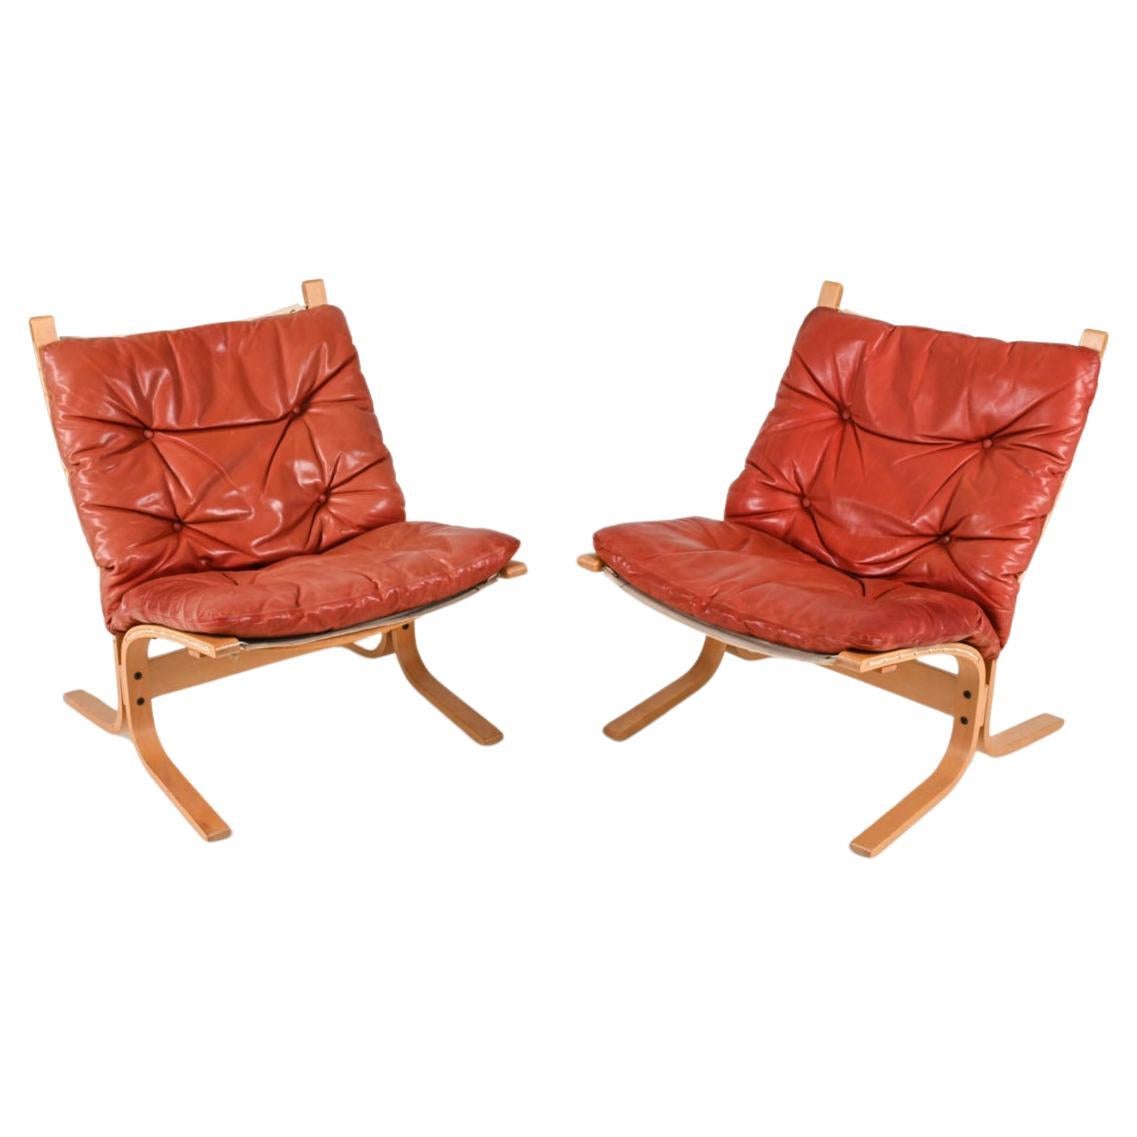 Pair of Midcentury Scandinavian Modern Leather Siesta Lounge Chairs by Westnofa For Sale